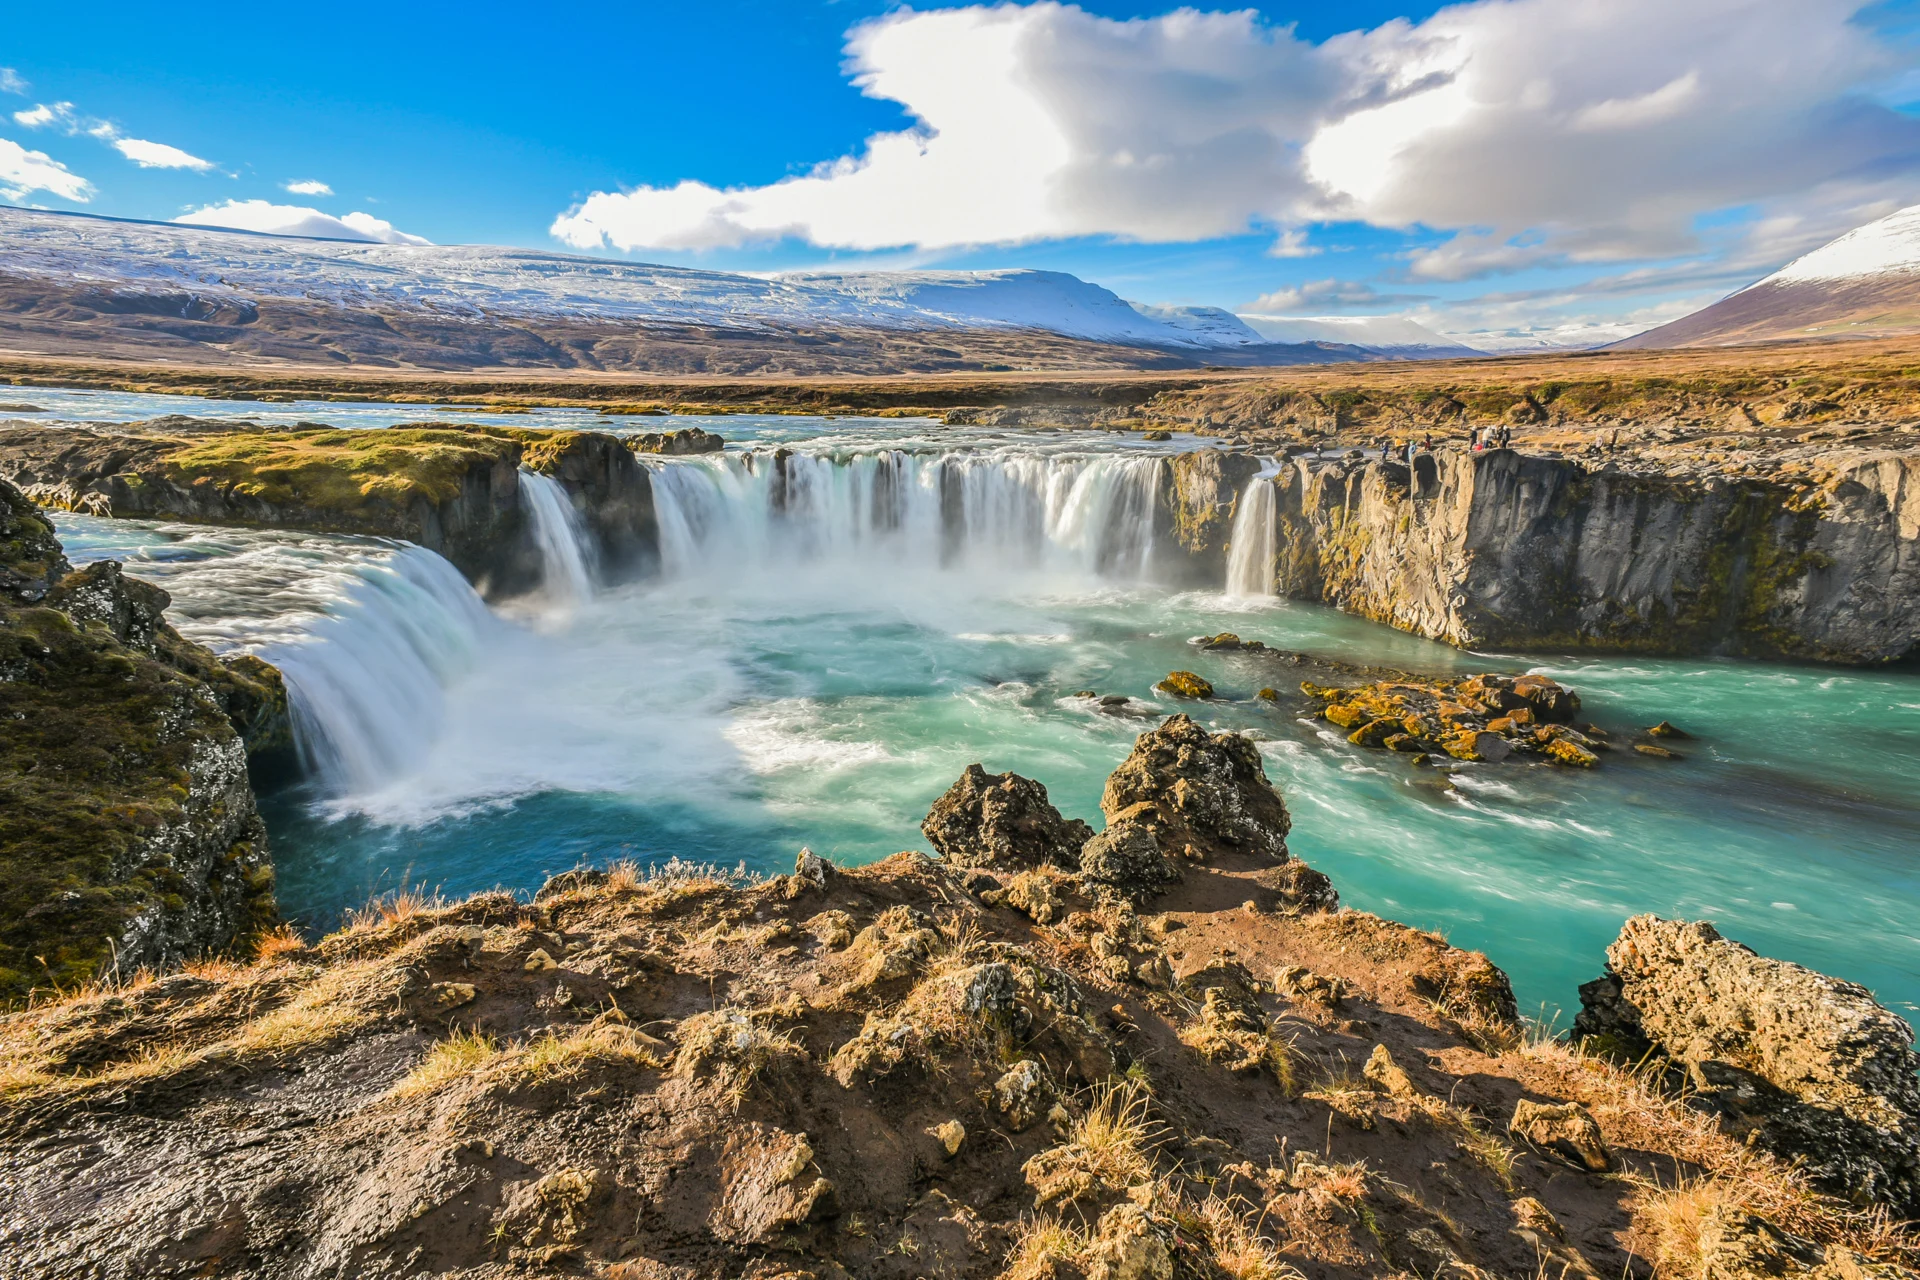 Goðafoss waterfall in Iceland. Credit: Shutterstock